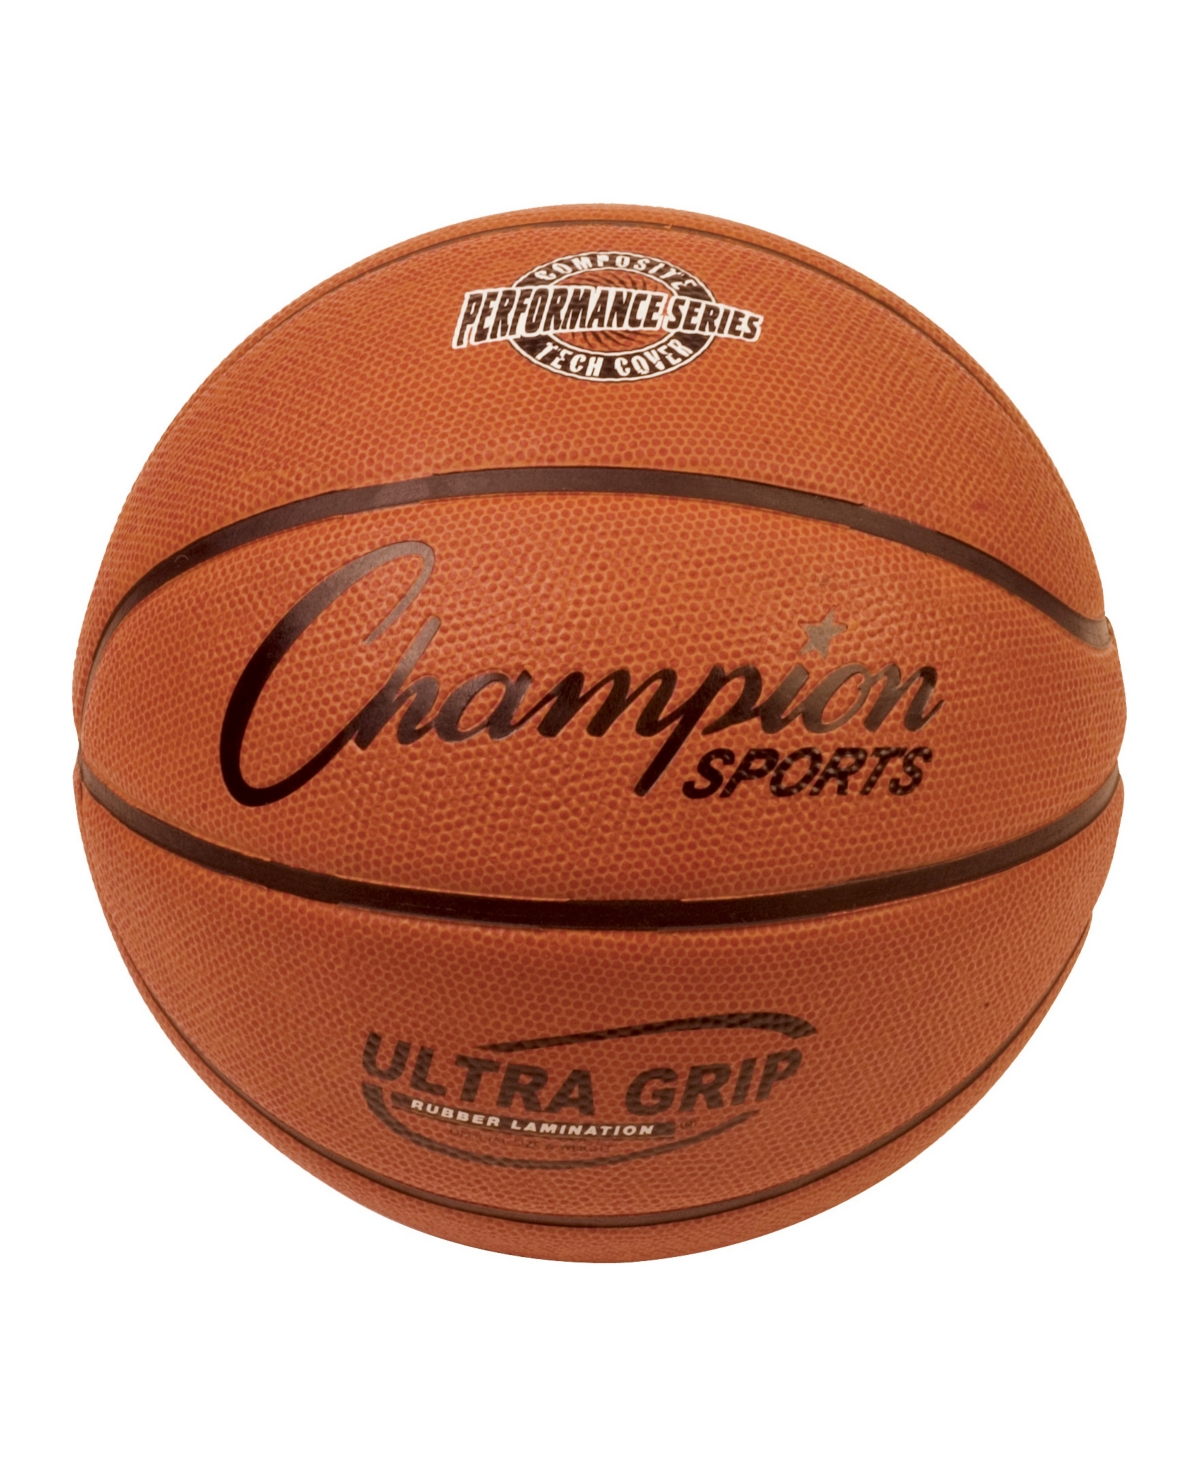 Champion Sports Ultra Grip Rubber Basketball With Bladder In Orange